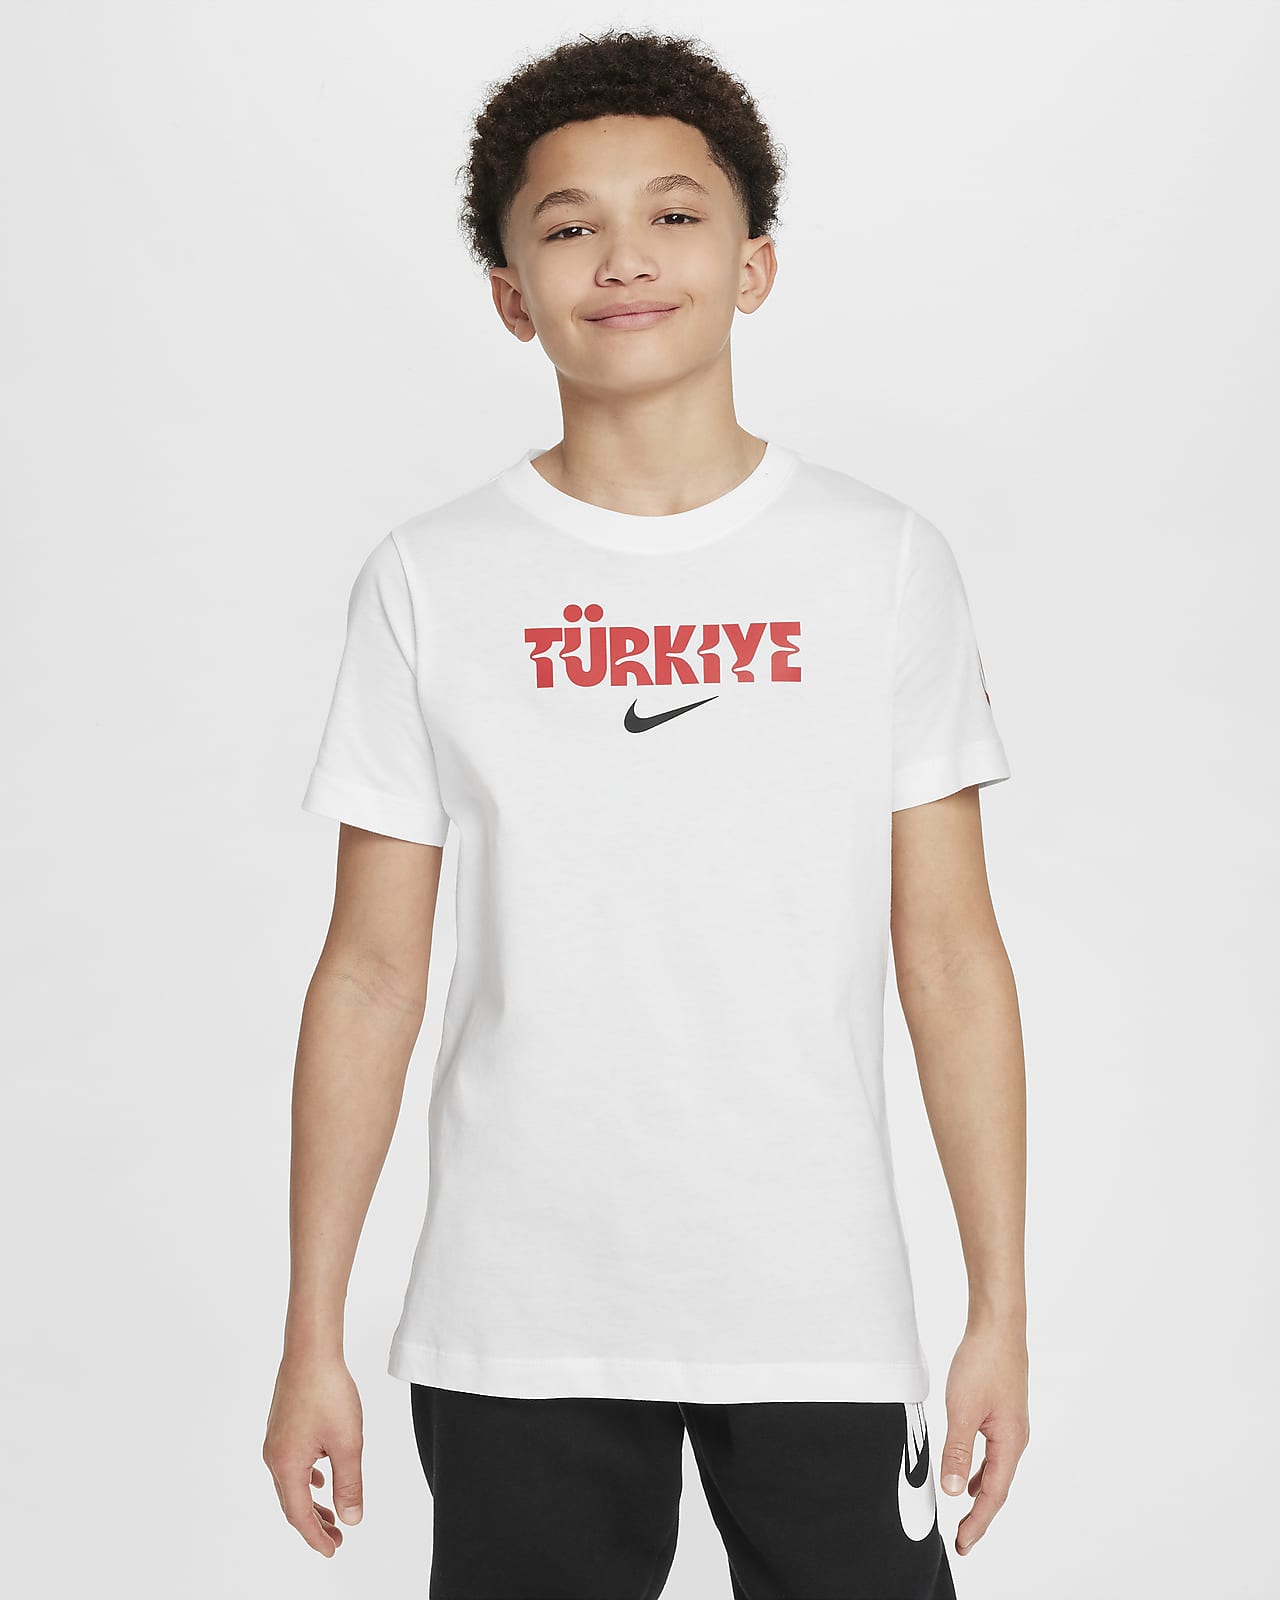 Crest Turquía Camiseta Nike Football - Niño/a